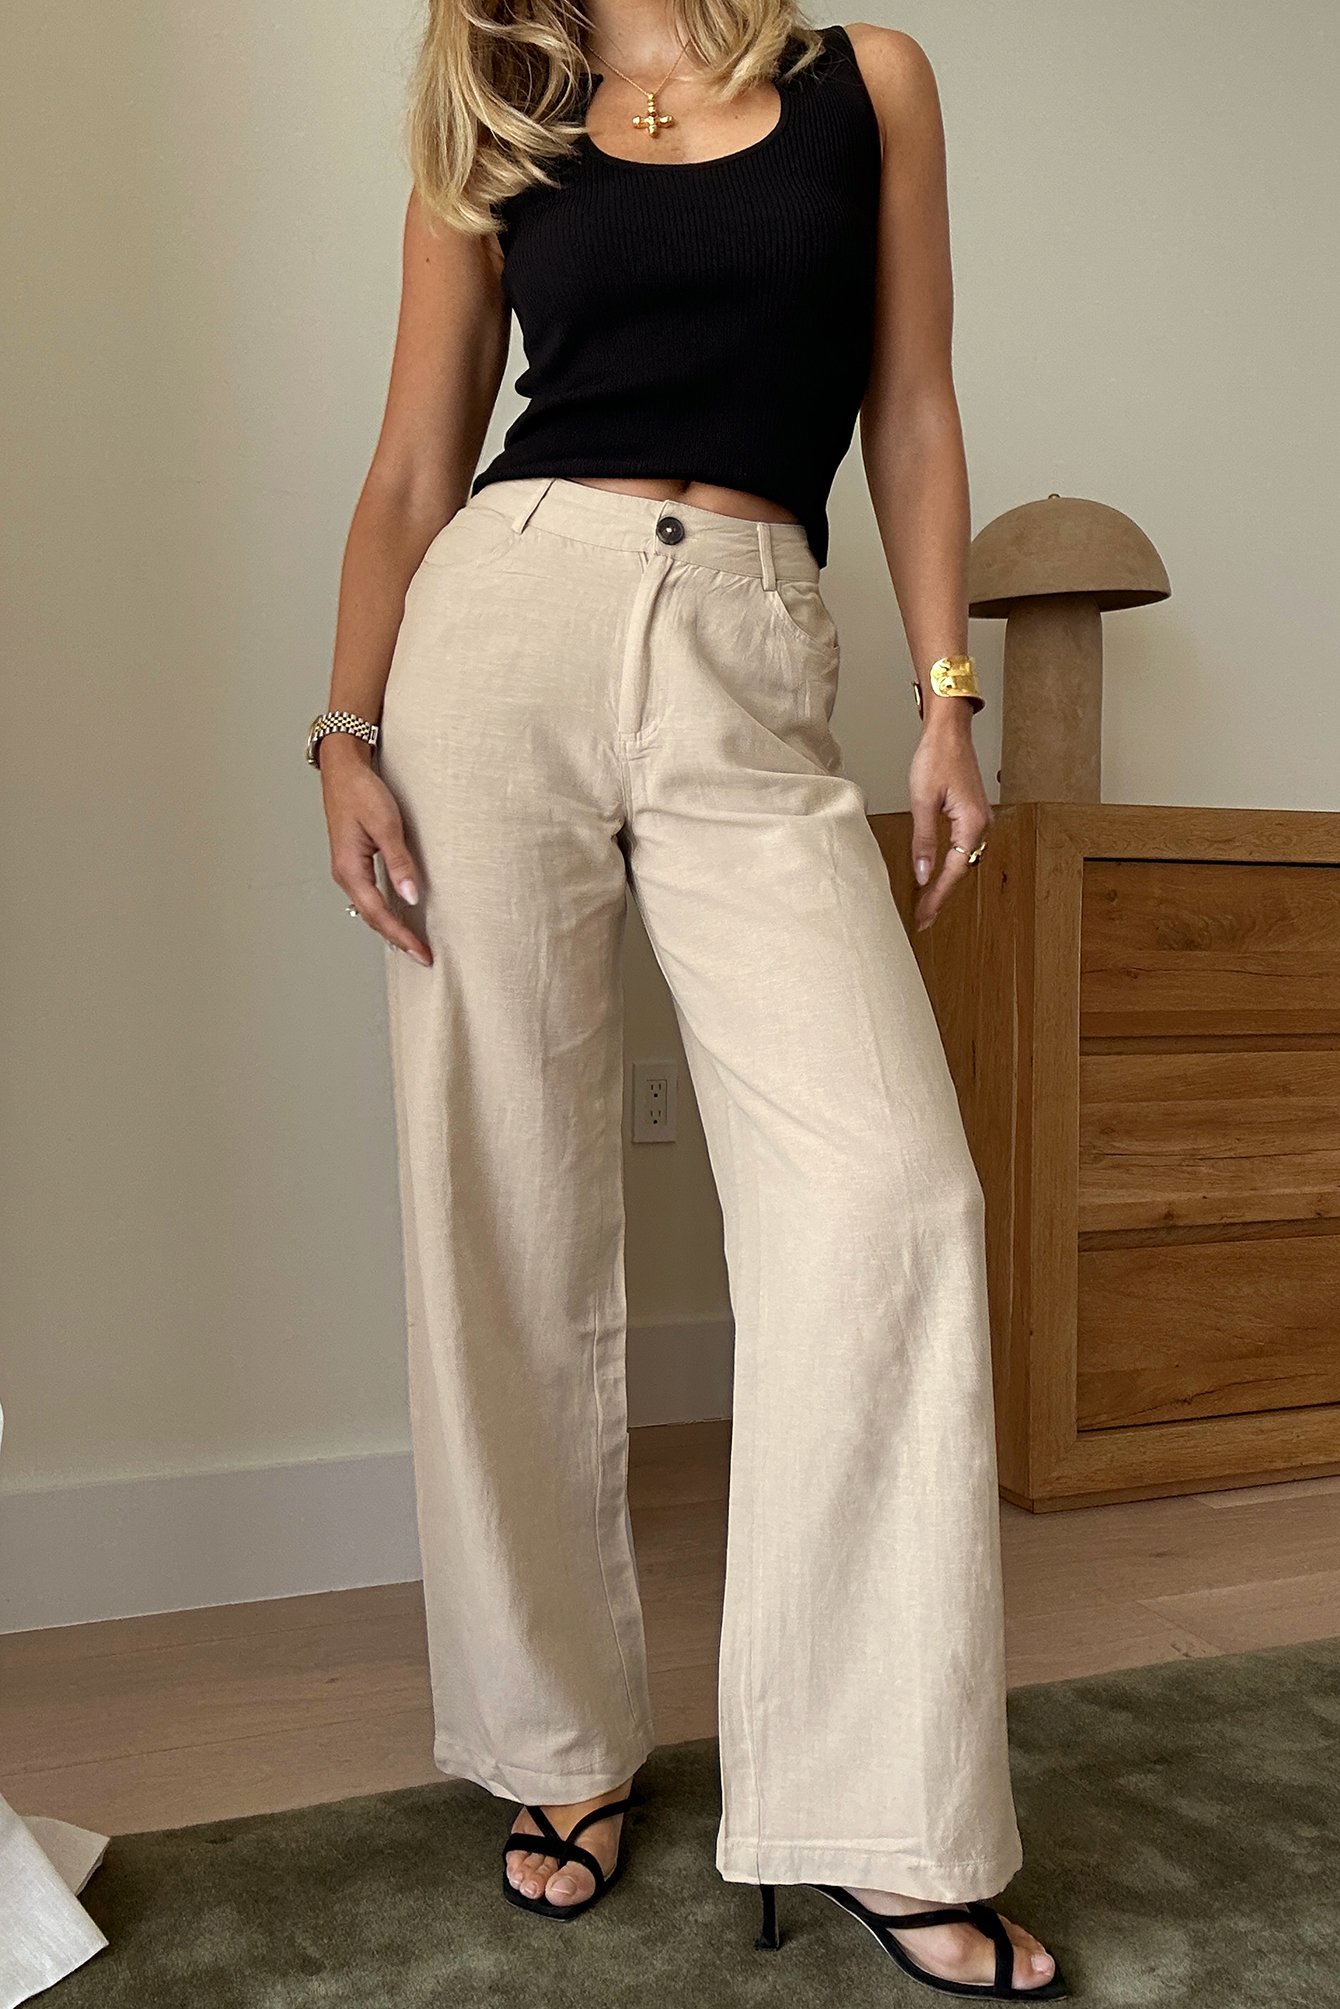 Off shoulder top and white pants outfit | Mode élégante, Fashion mode, Mode  femme